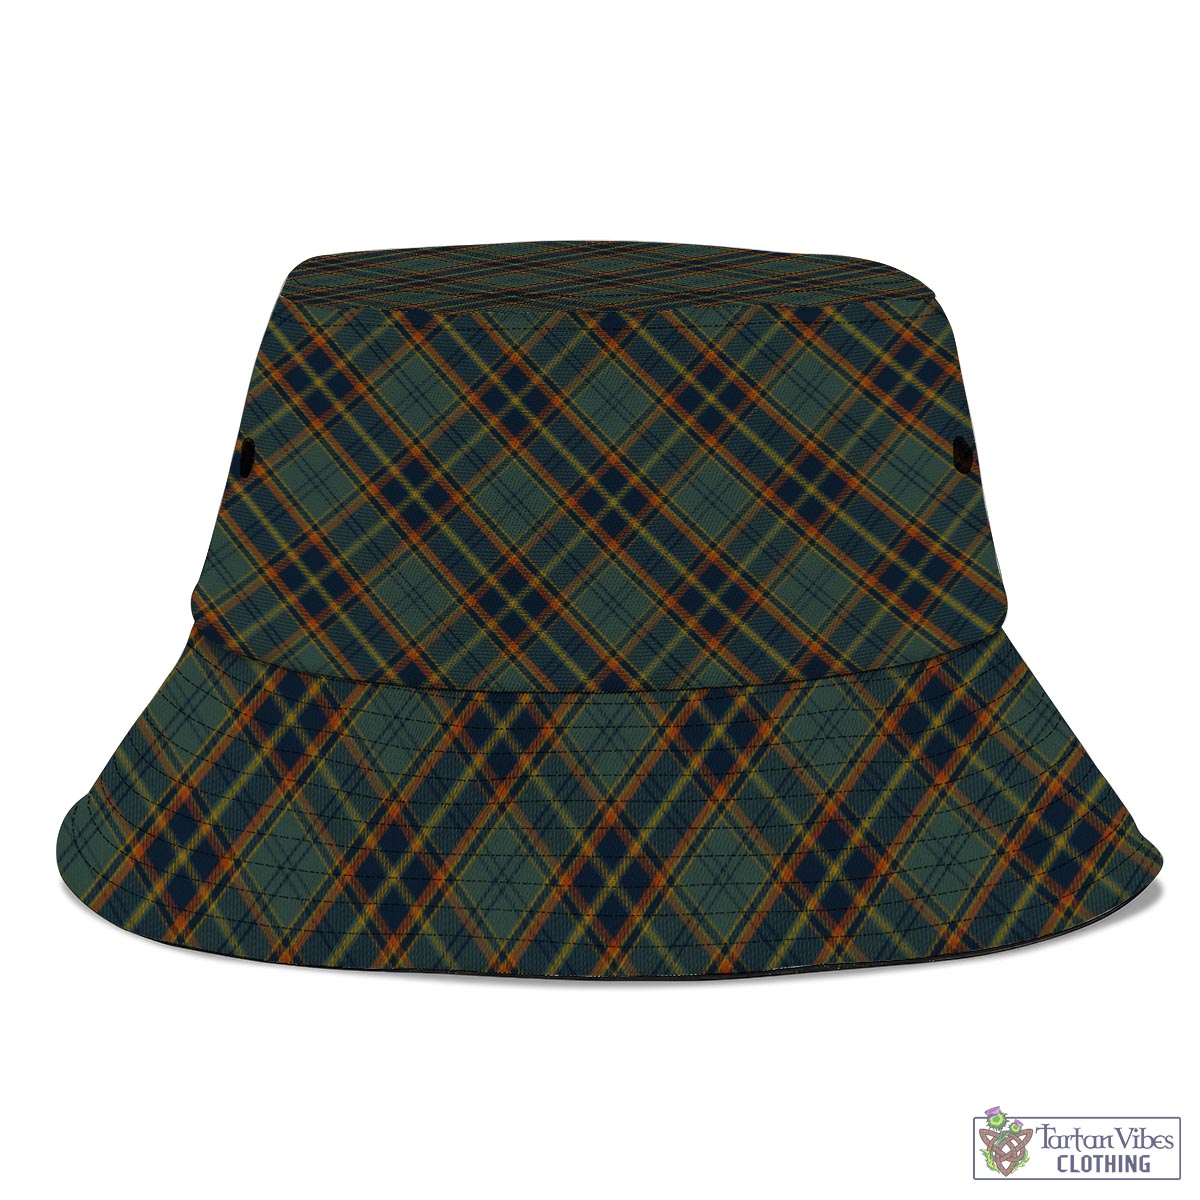 Tartan Vibes Clothing Antrim County Ireland Tartan Bucket Hat